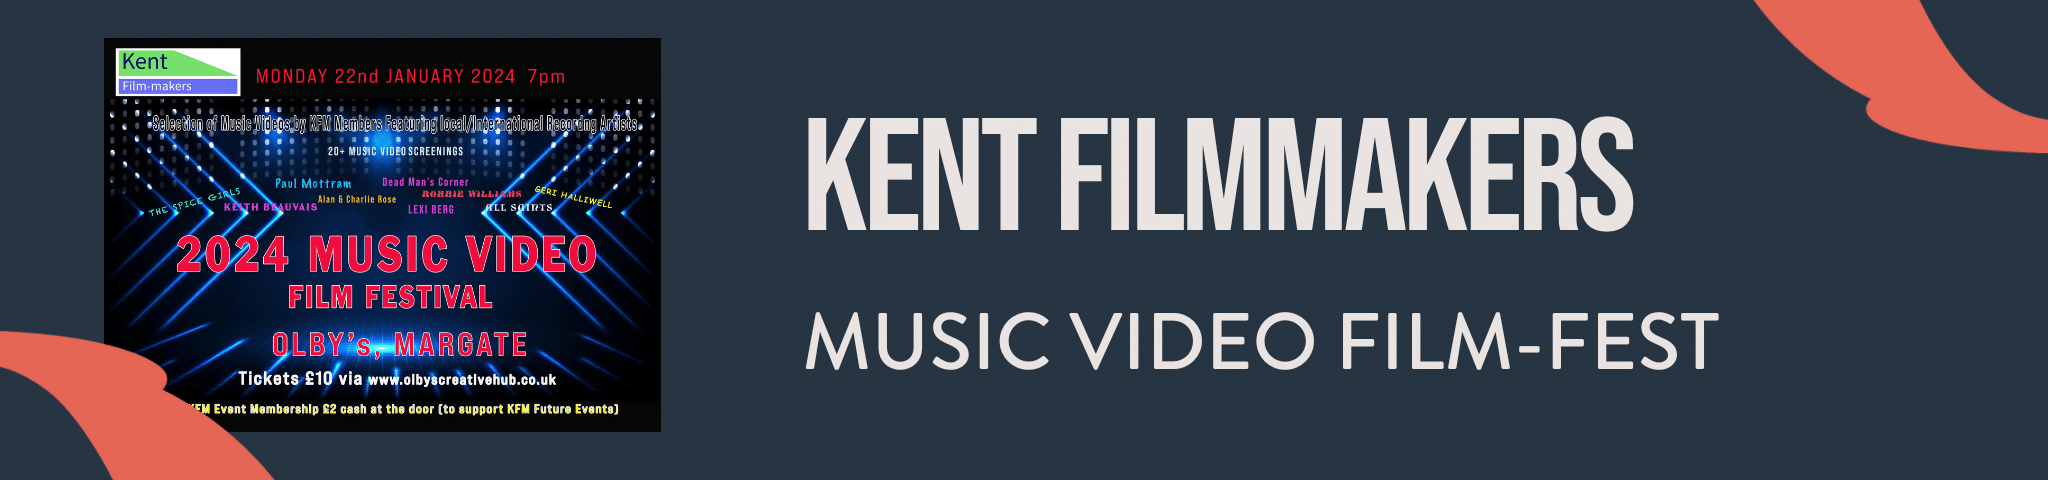 KFM MUSIC VIDEO FILM FESTIVAL – 22ND JANUARY 2024